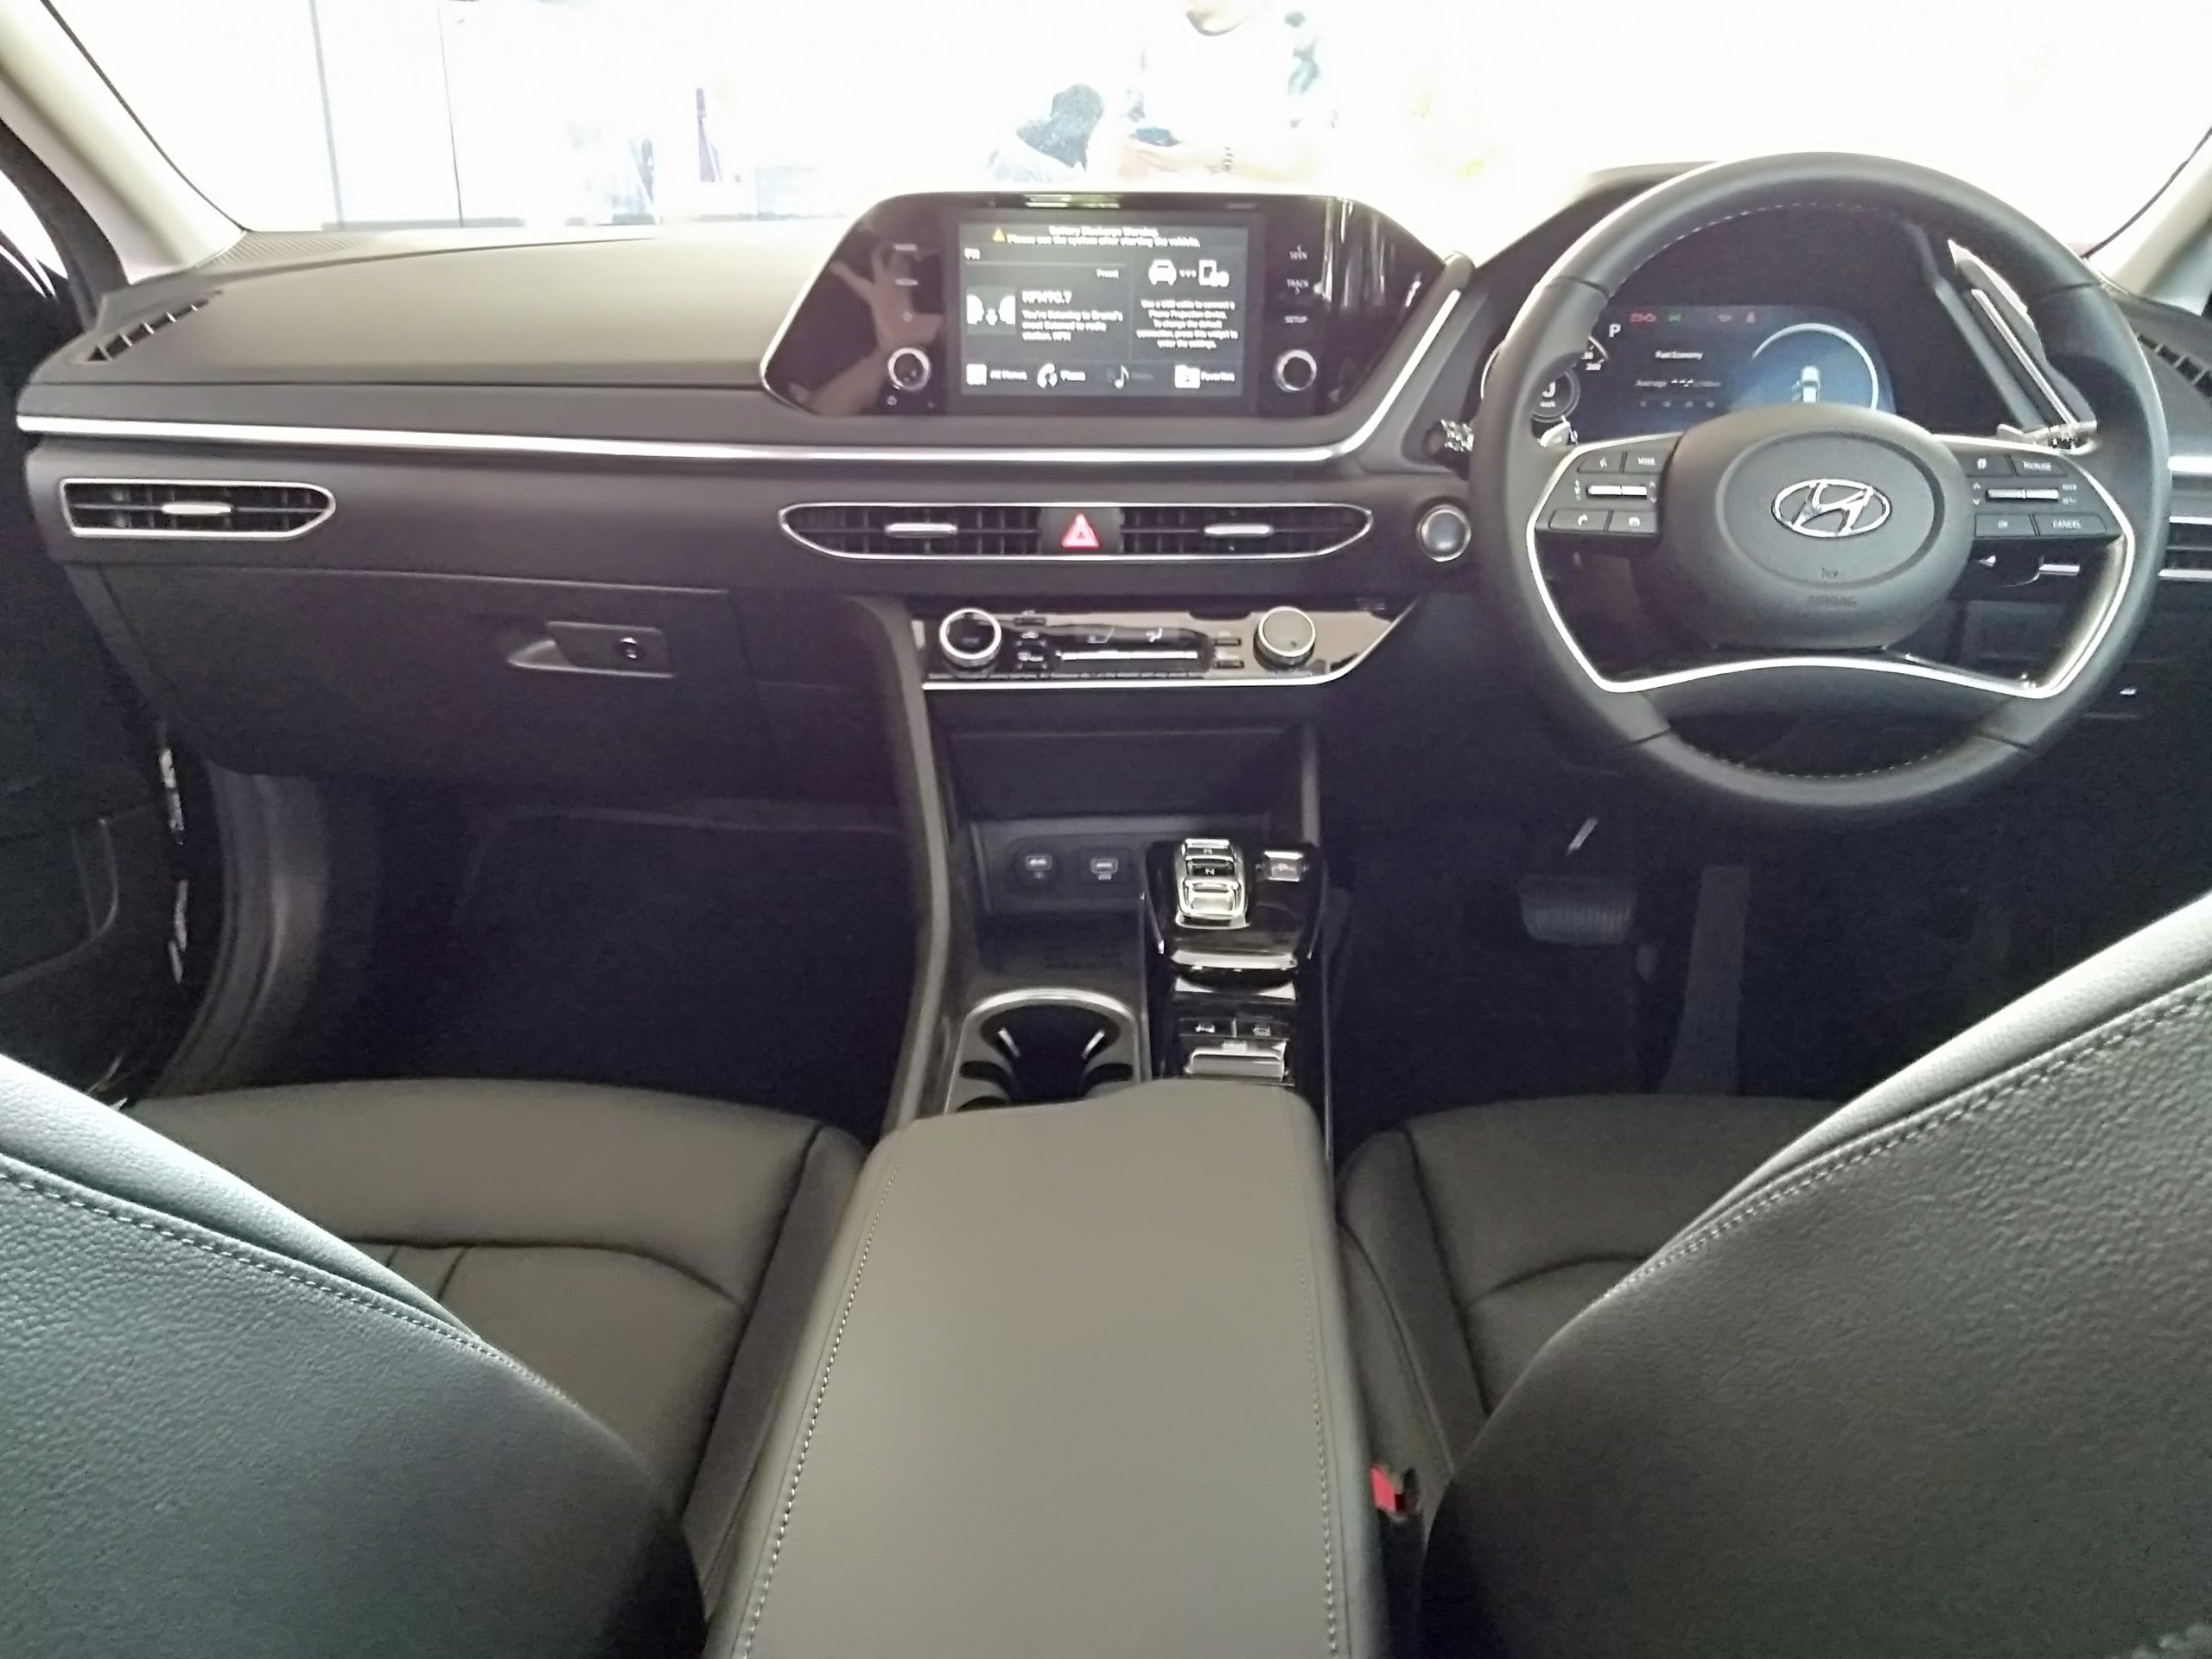 Hyundai Sonata 2022 Features